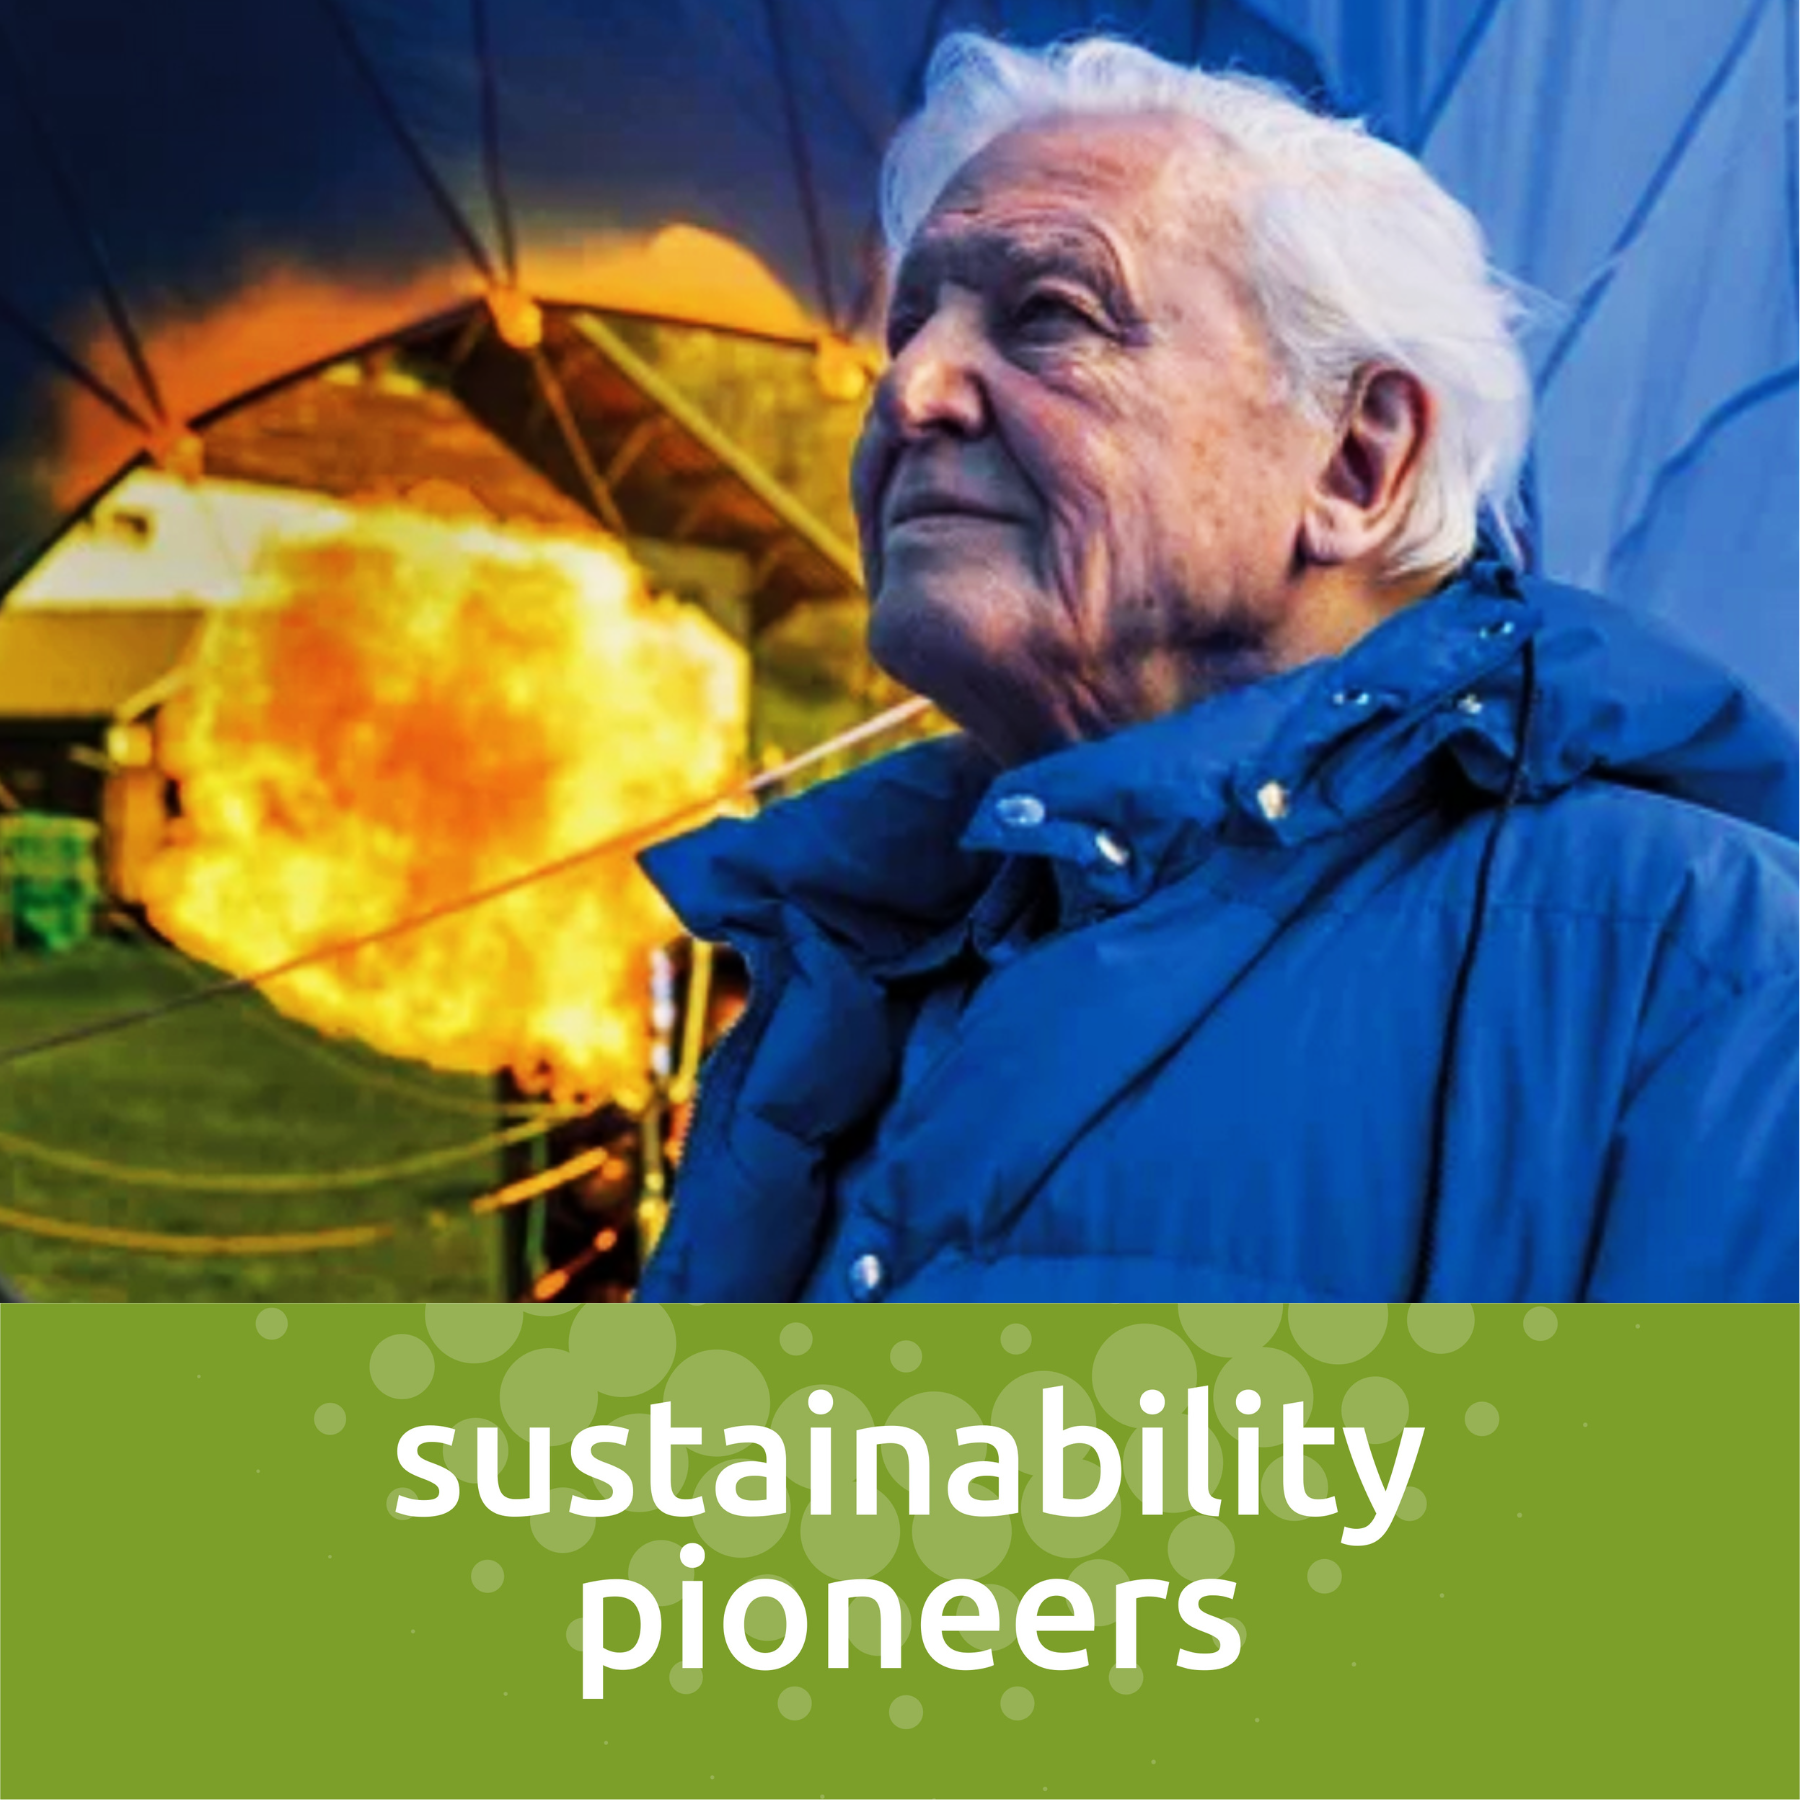 Sustainability Pioneer: Sir David Attenborough